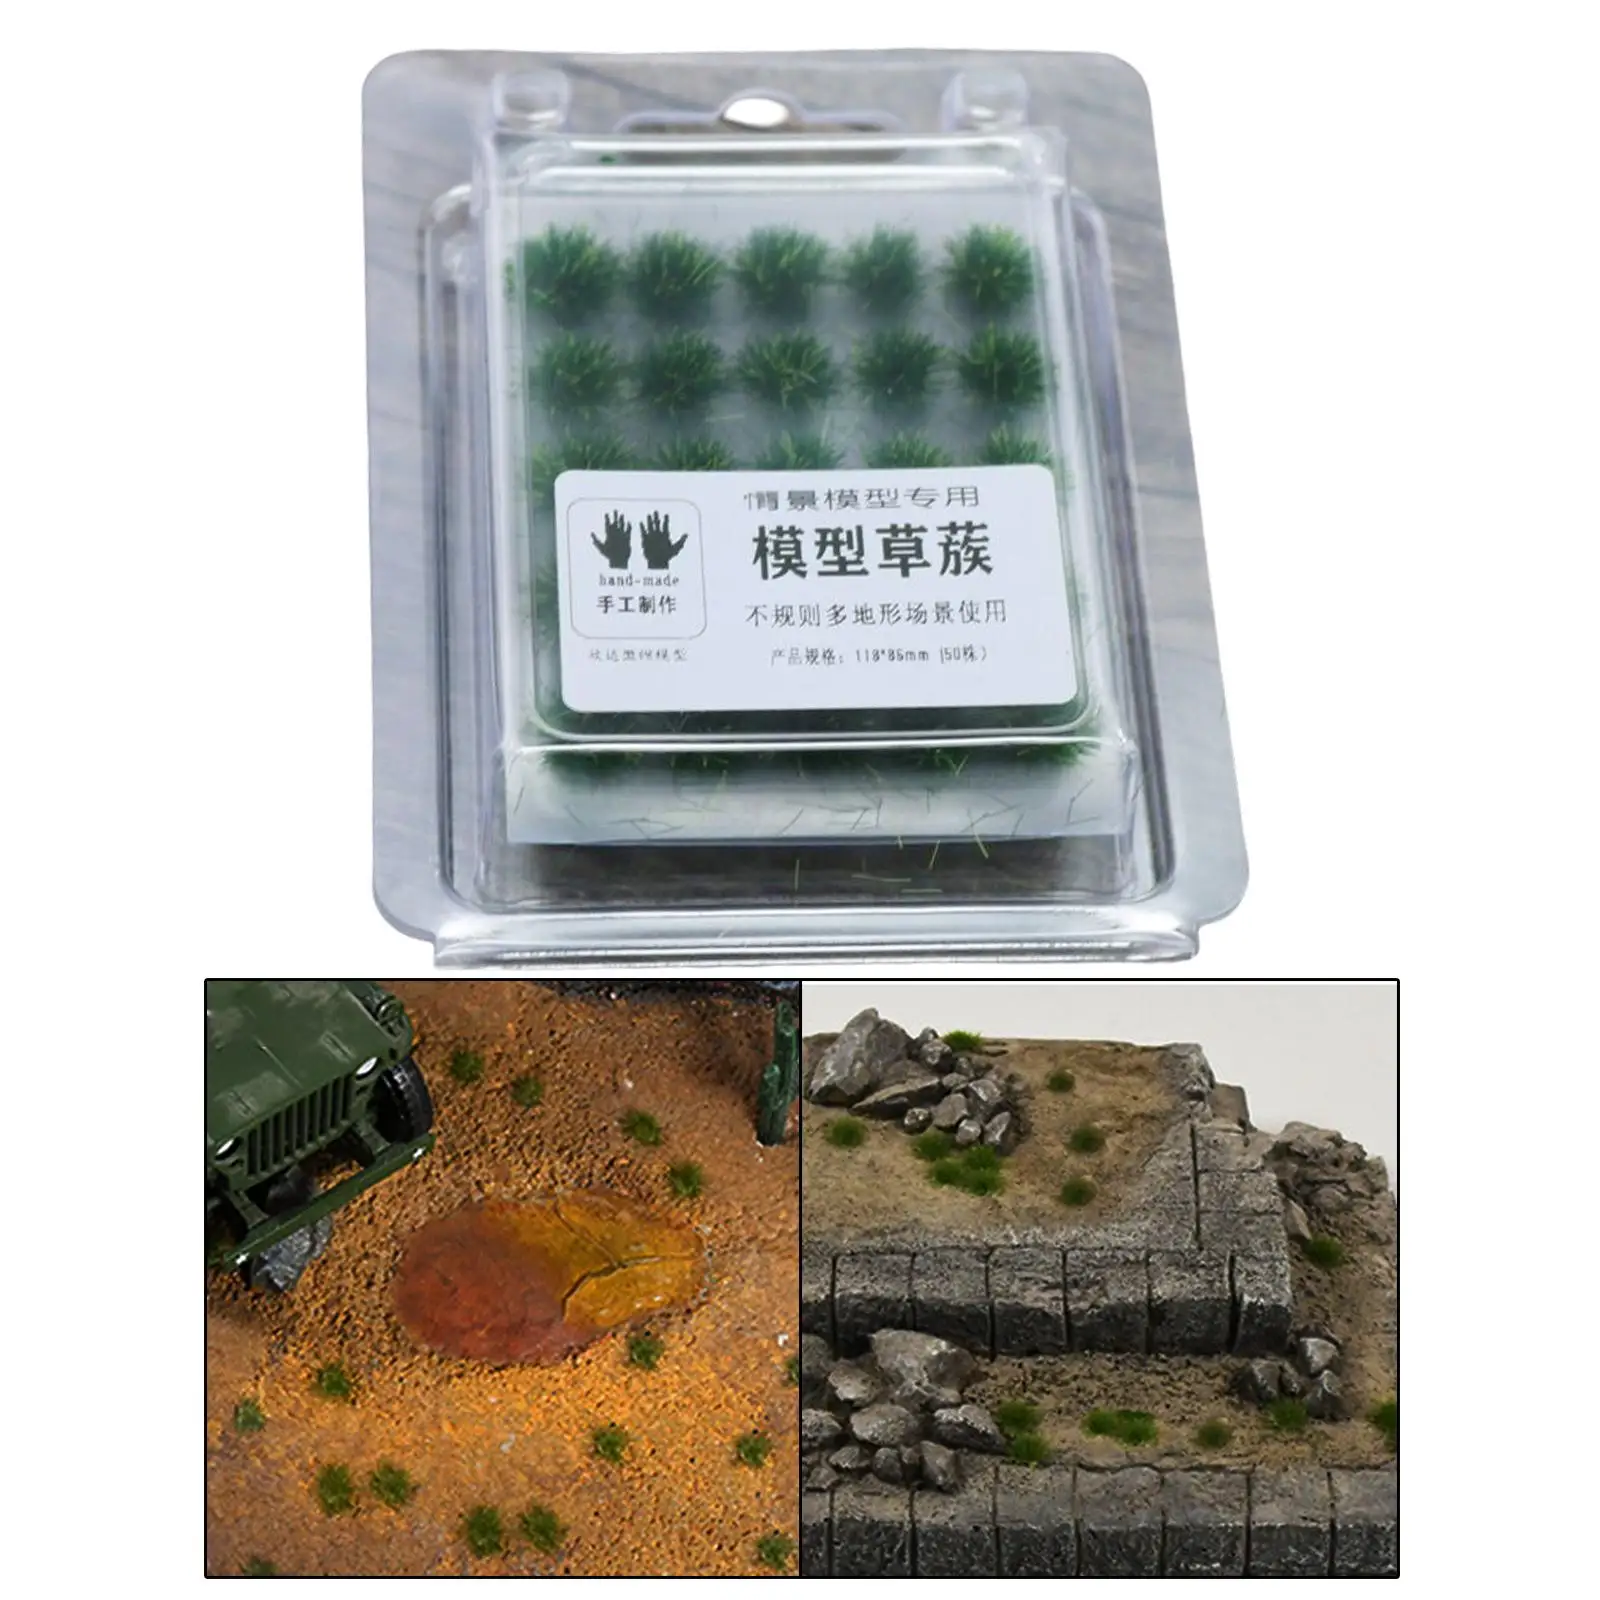 50 Pcs/Box Simulation Grass Bush Plant Scene Decor Handmade Miniature Model